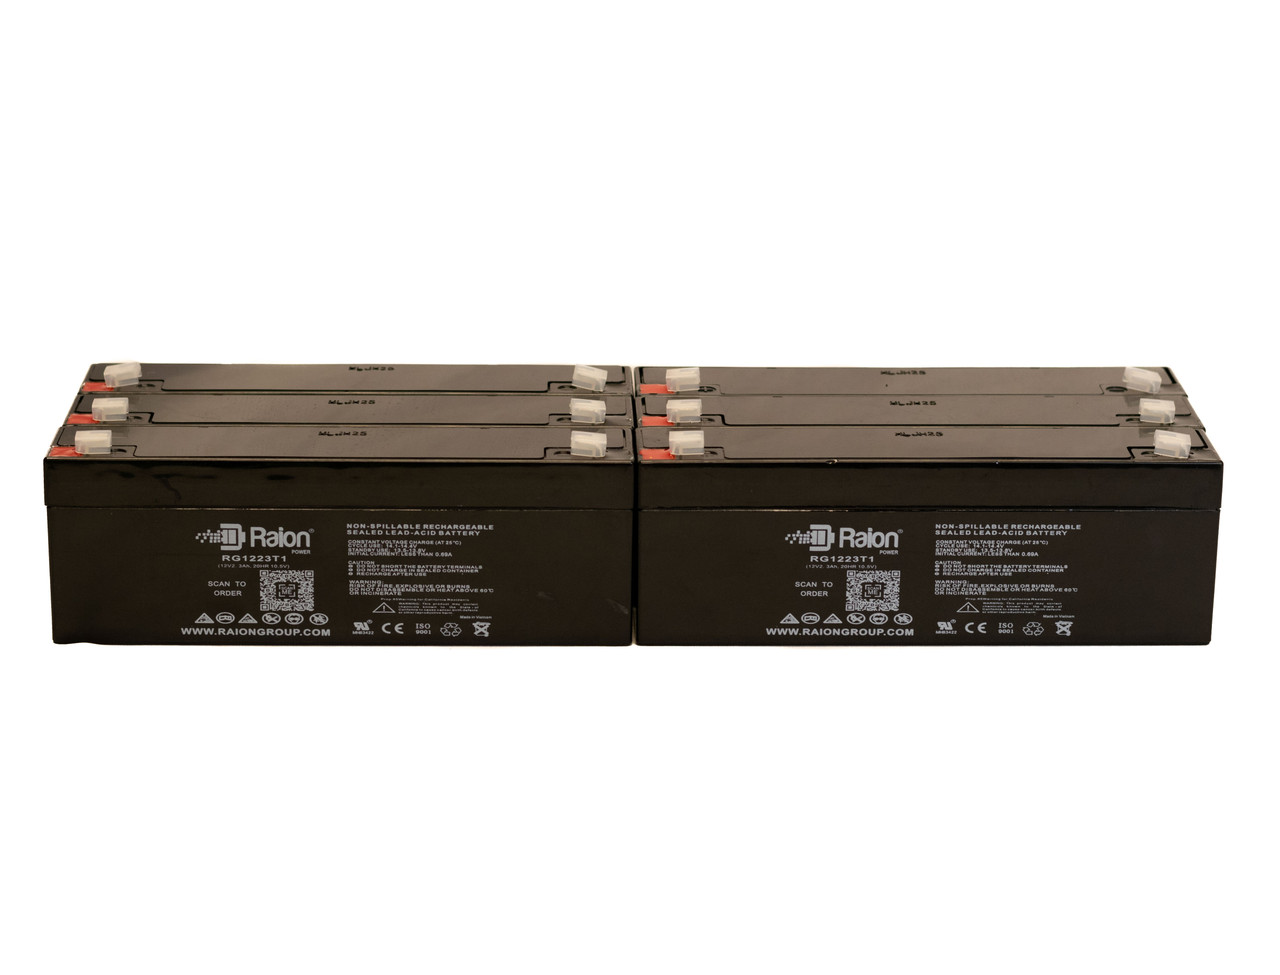 Raion Power 12V 2.3Ah RG1223T1 Replacement Medical Battery for Mortara ELI 150c ECG Recorder - 6 Pack